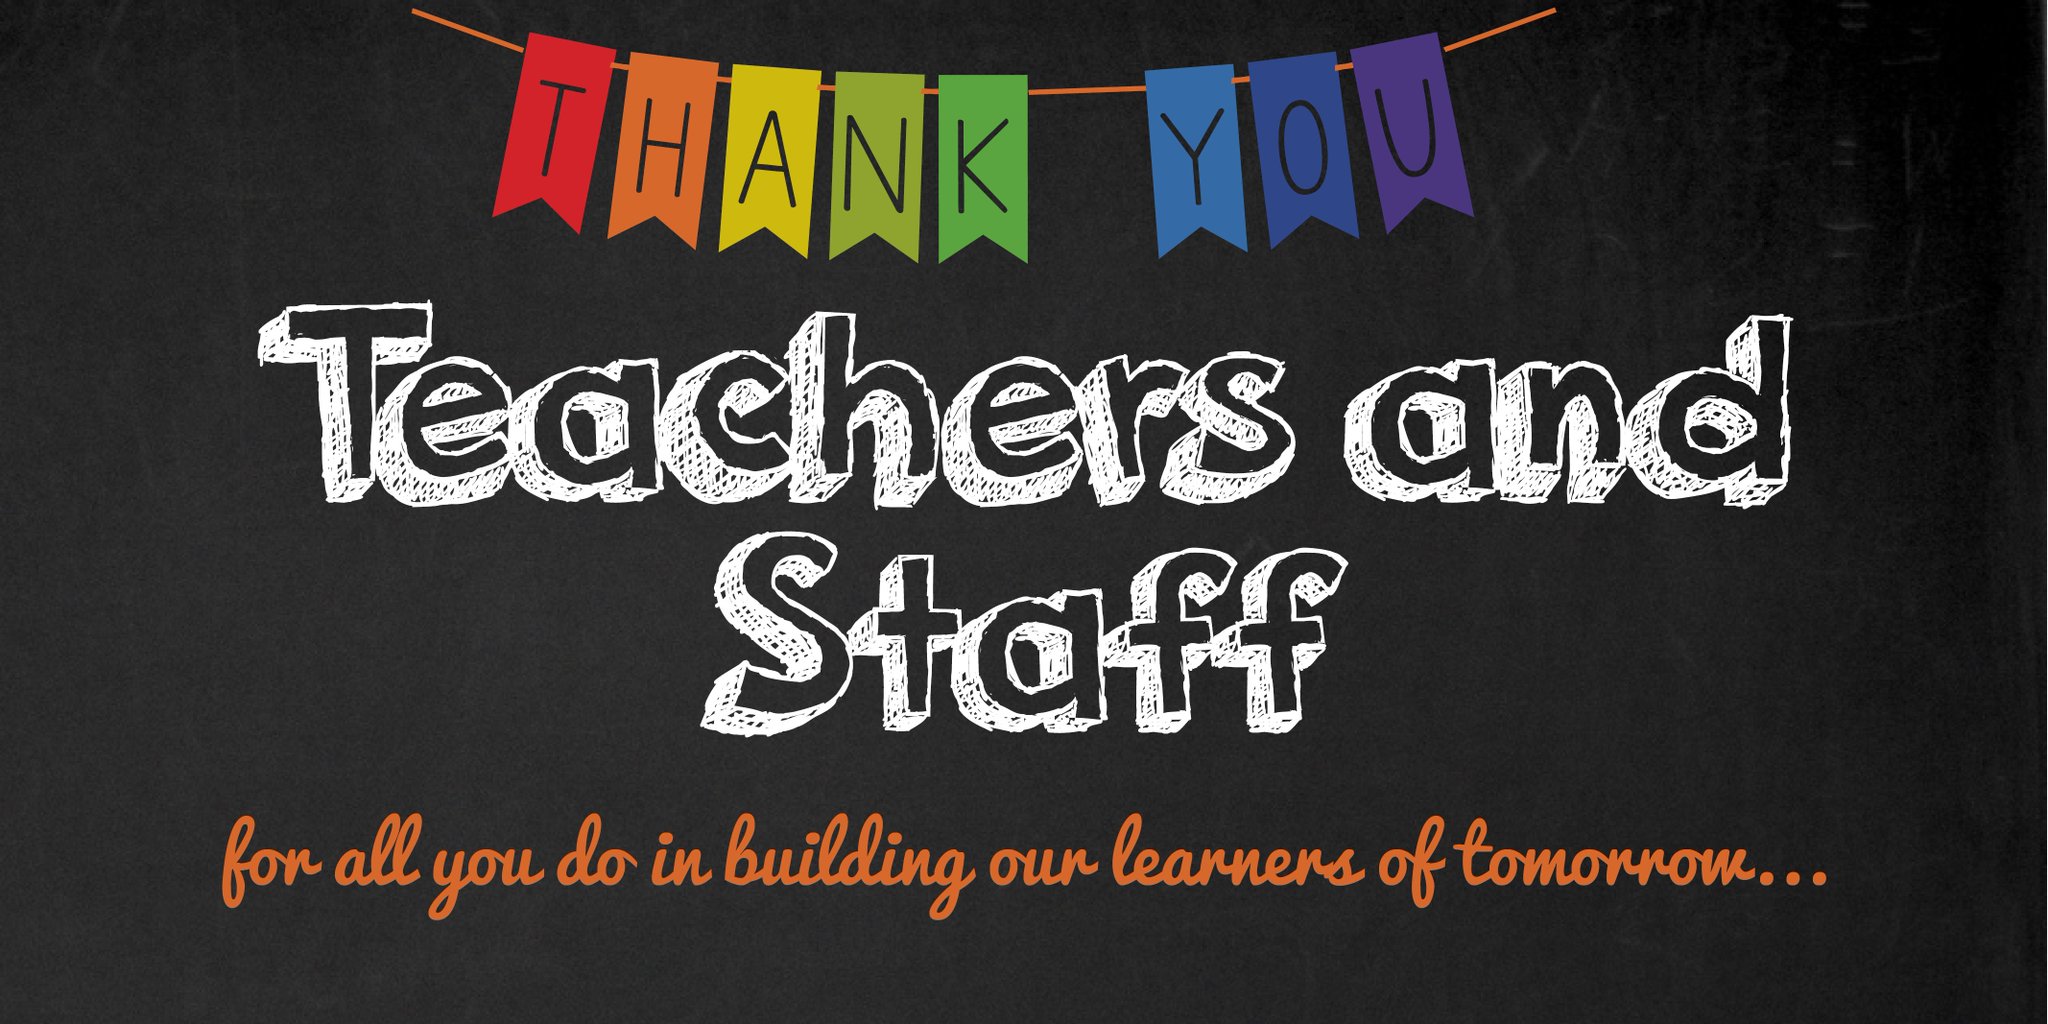 PlatteCountyPirates on Twitter: "Happy Teacher/Staff Appreciation Week